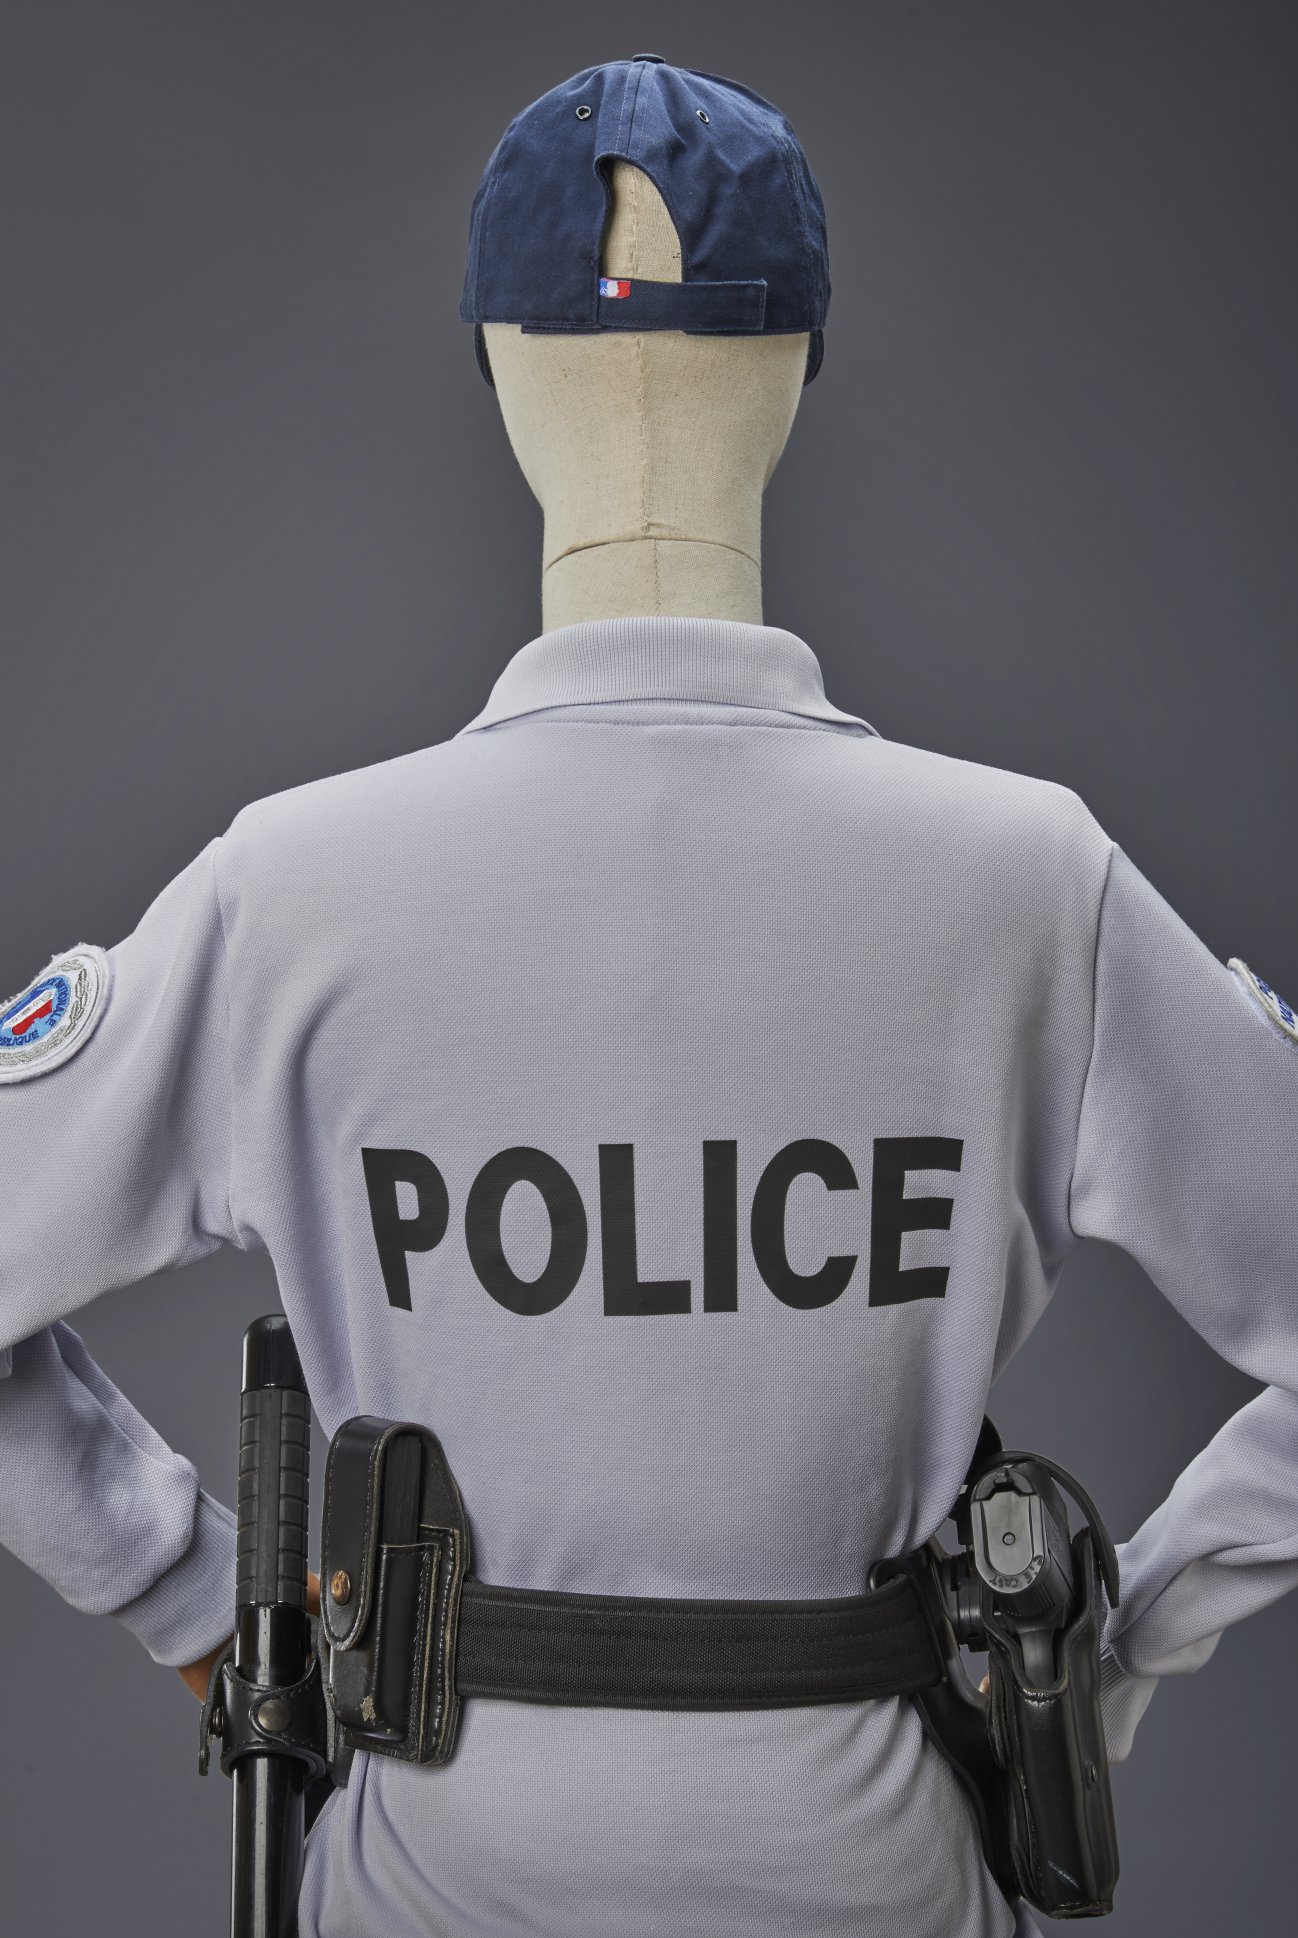 La Police Nationale - UNIFORM